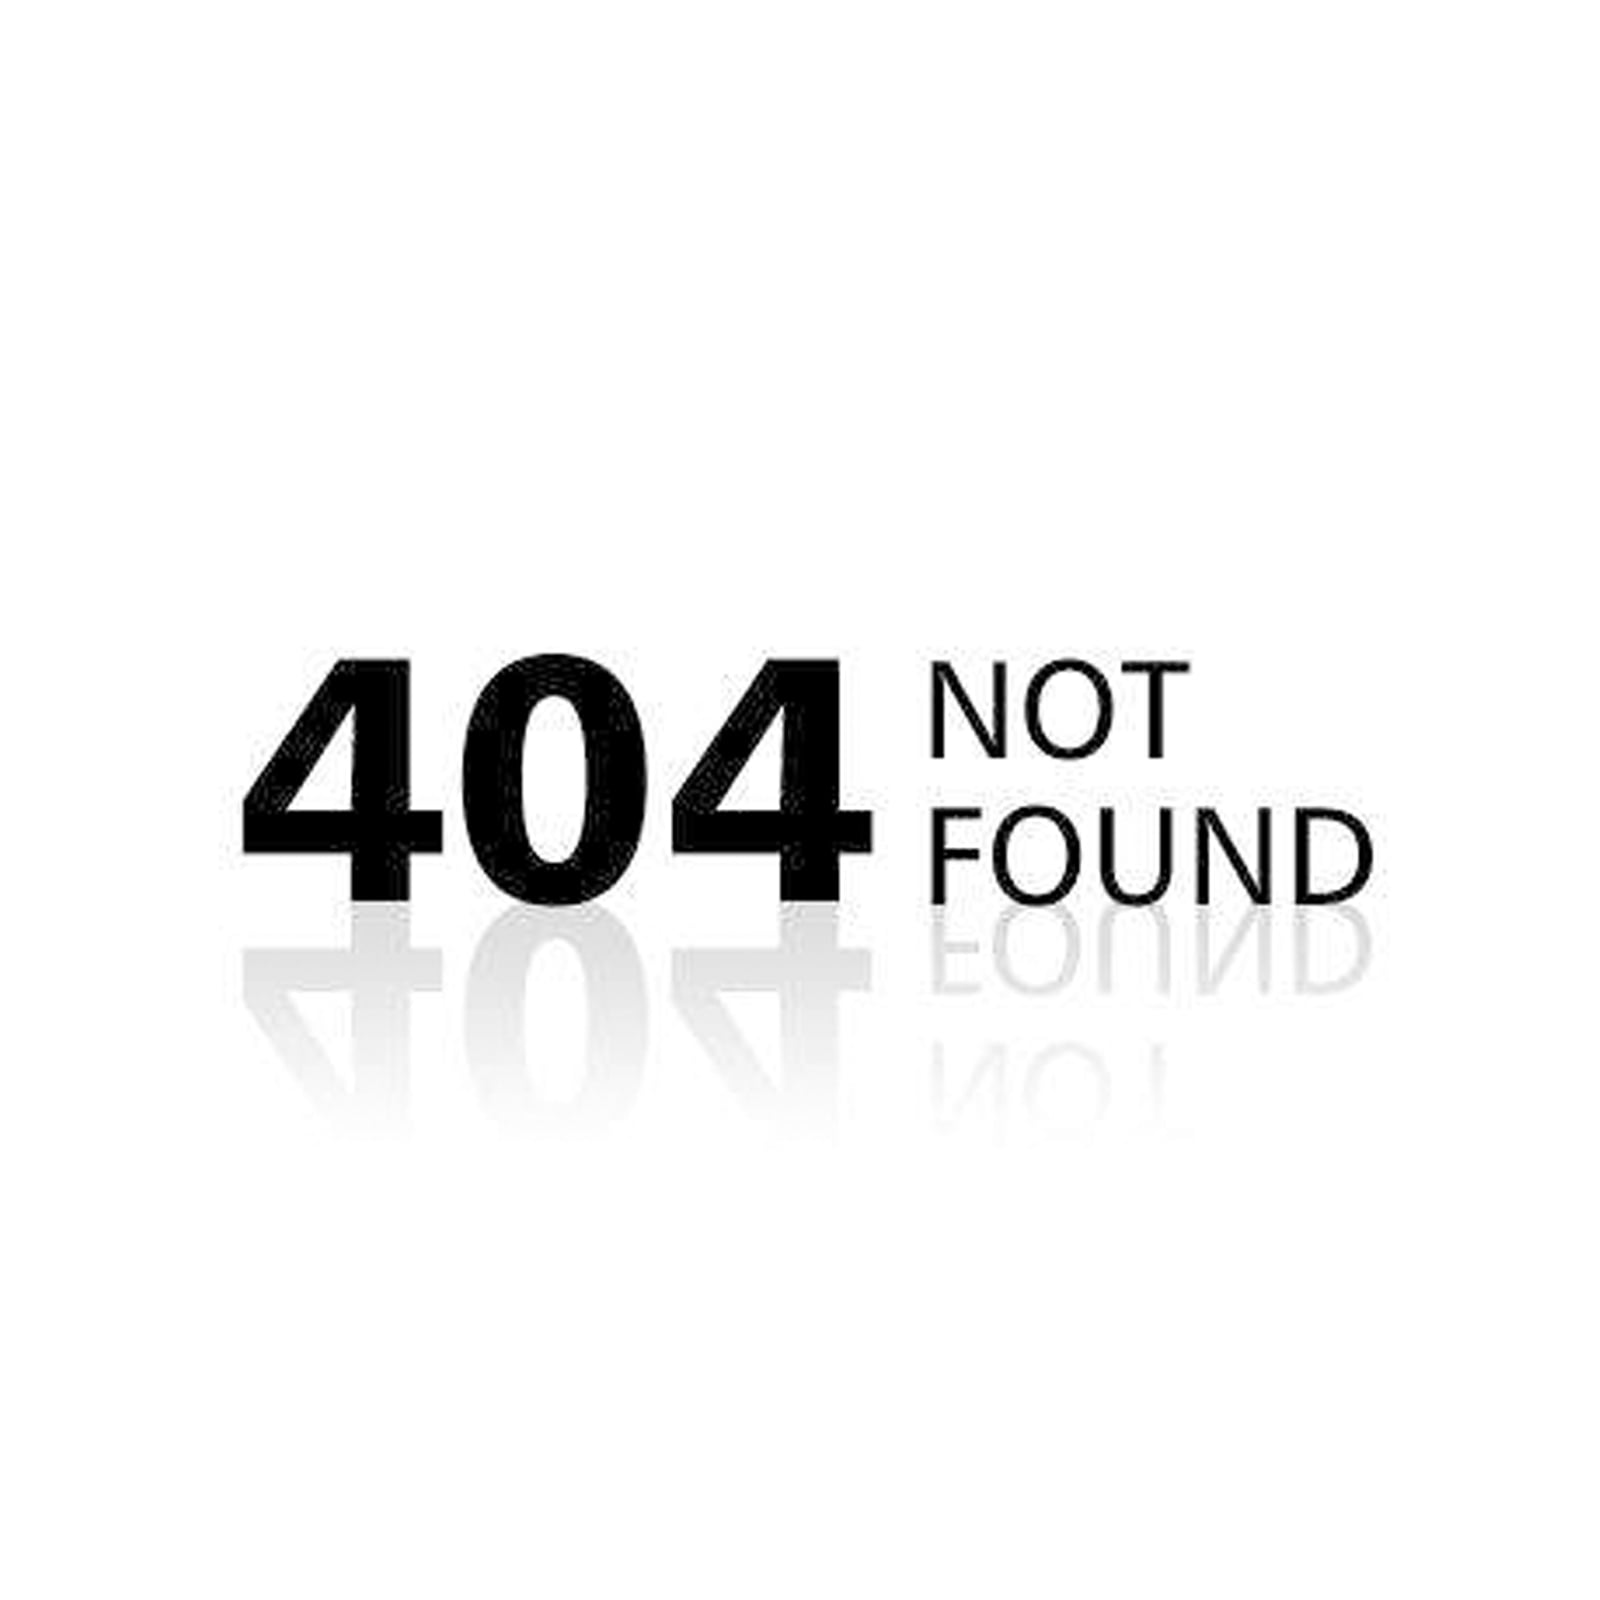 Product not found. 404 Not found. Логотип 404. 404 Нот фаунд. 404 Not found картинка.